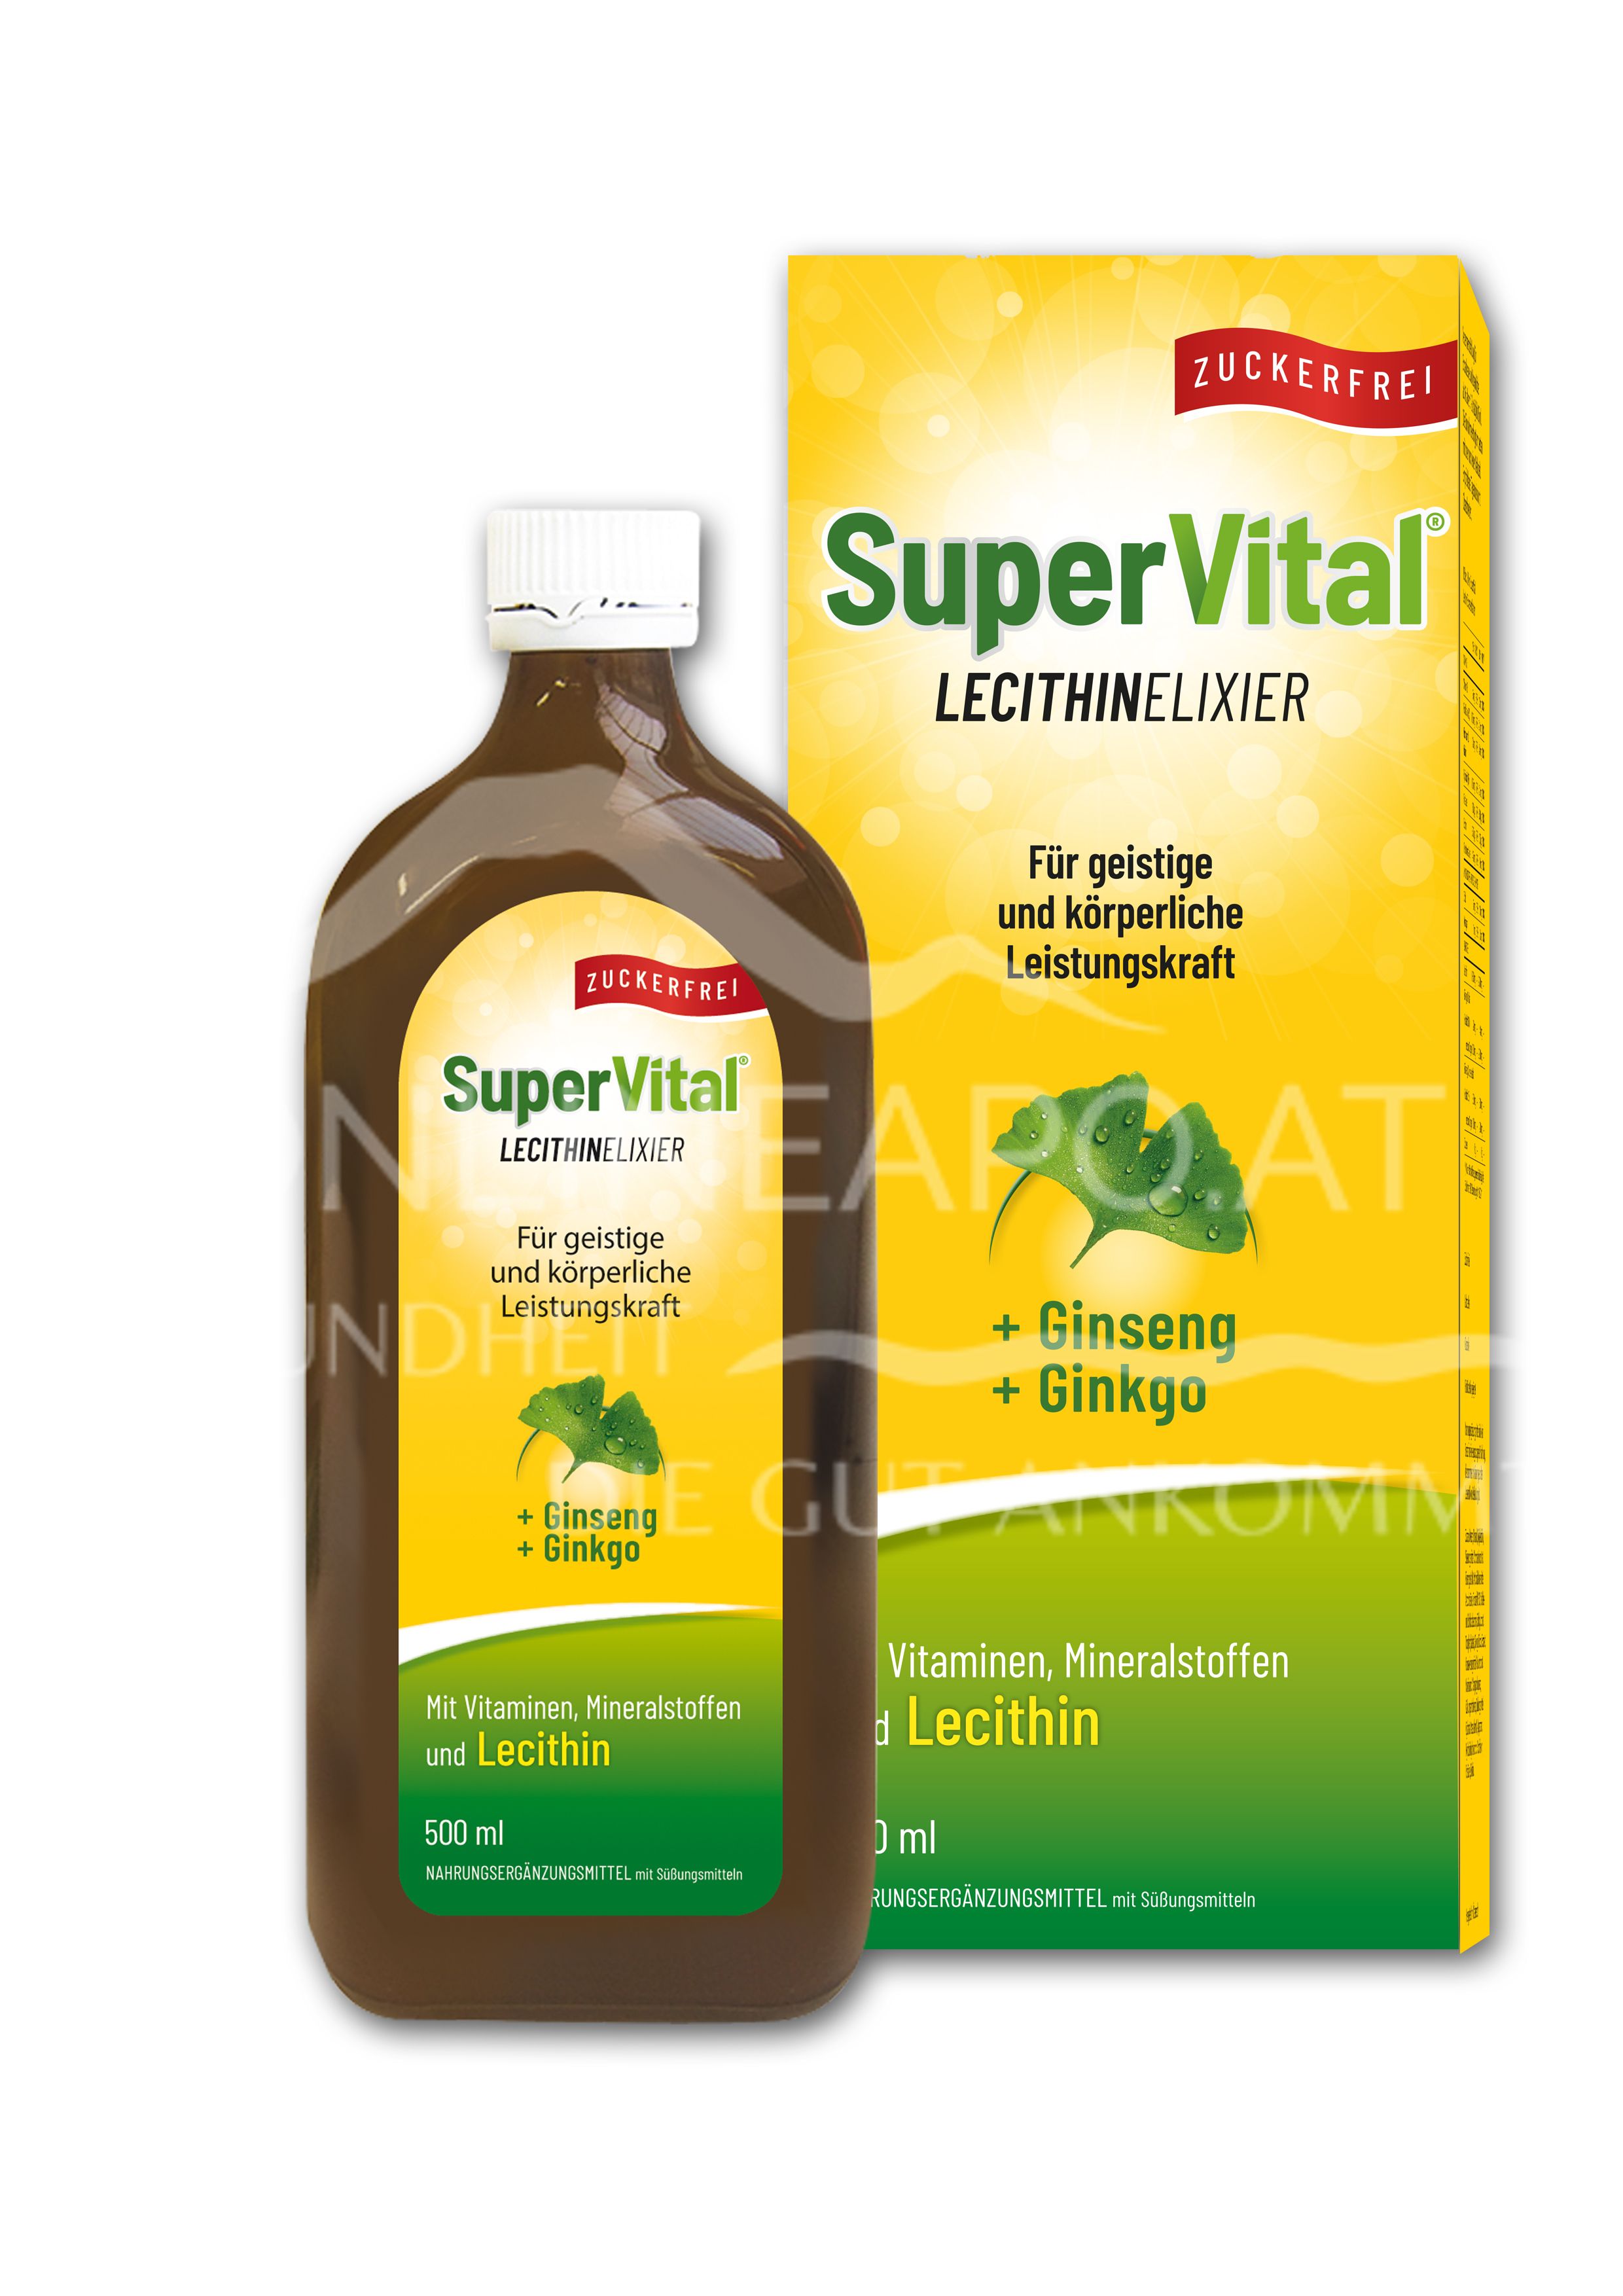 SuperVital® LecithinElixier